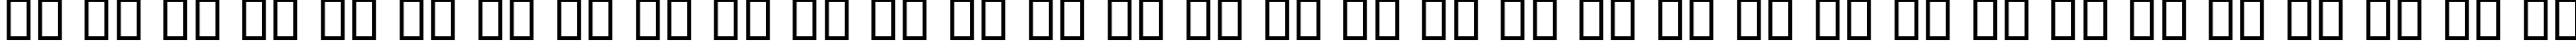 Пример написания русского алфавита шрифтом B Nazanin